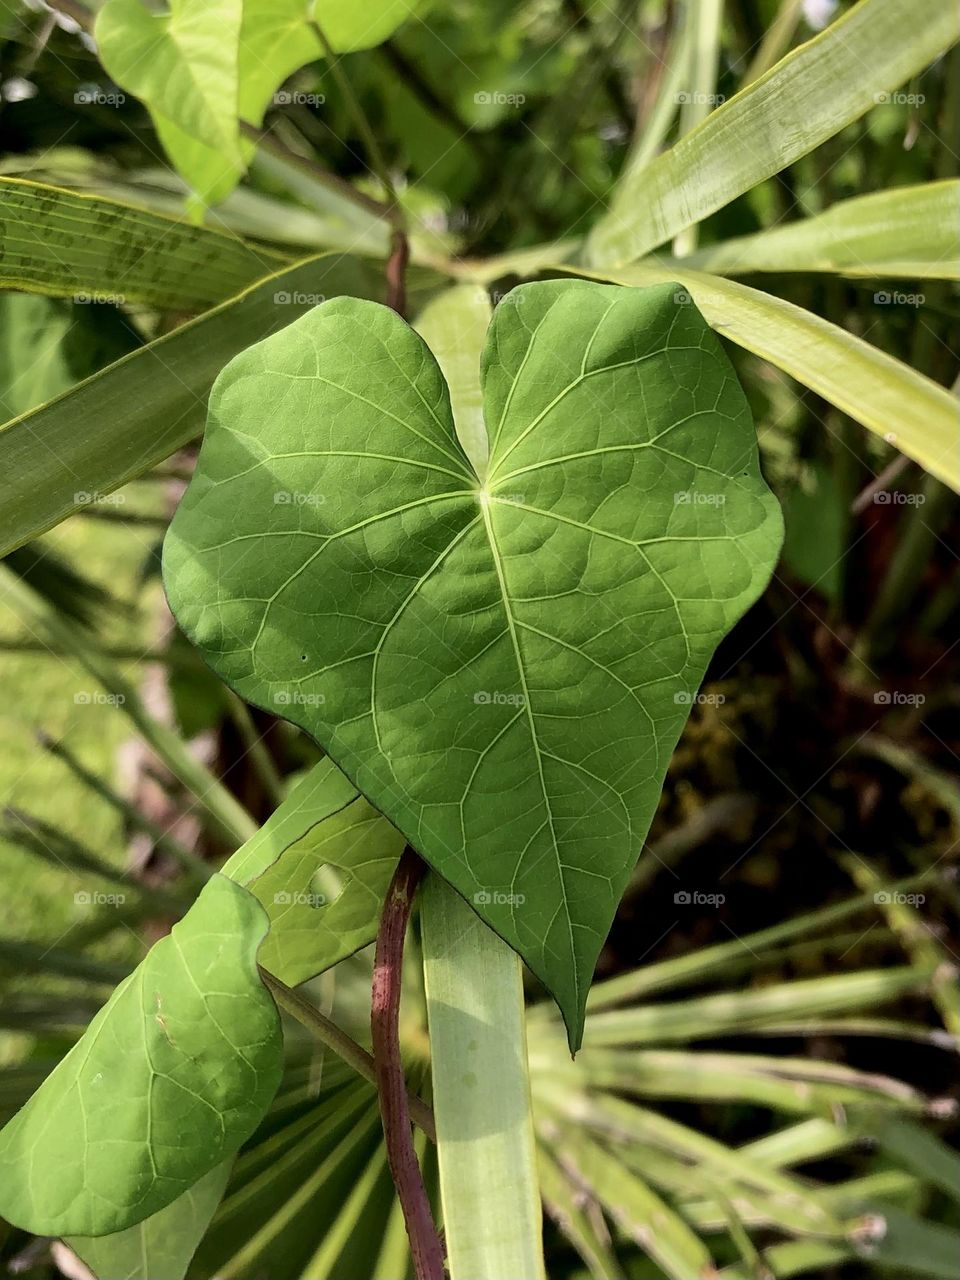 Closeup of a green heart-shaped leaf! 💚